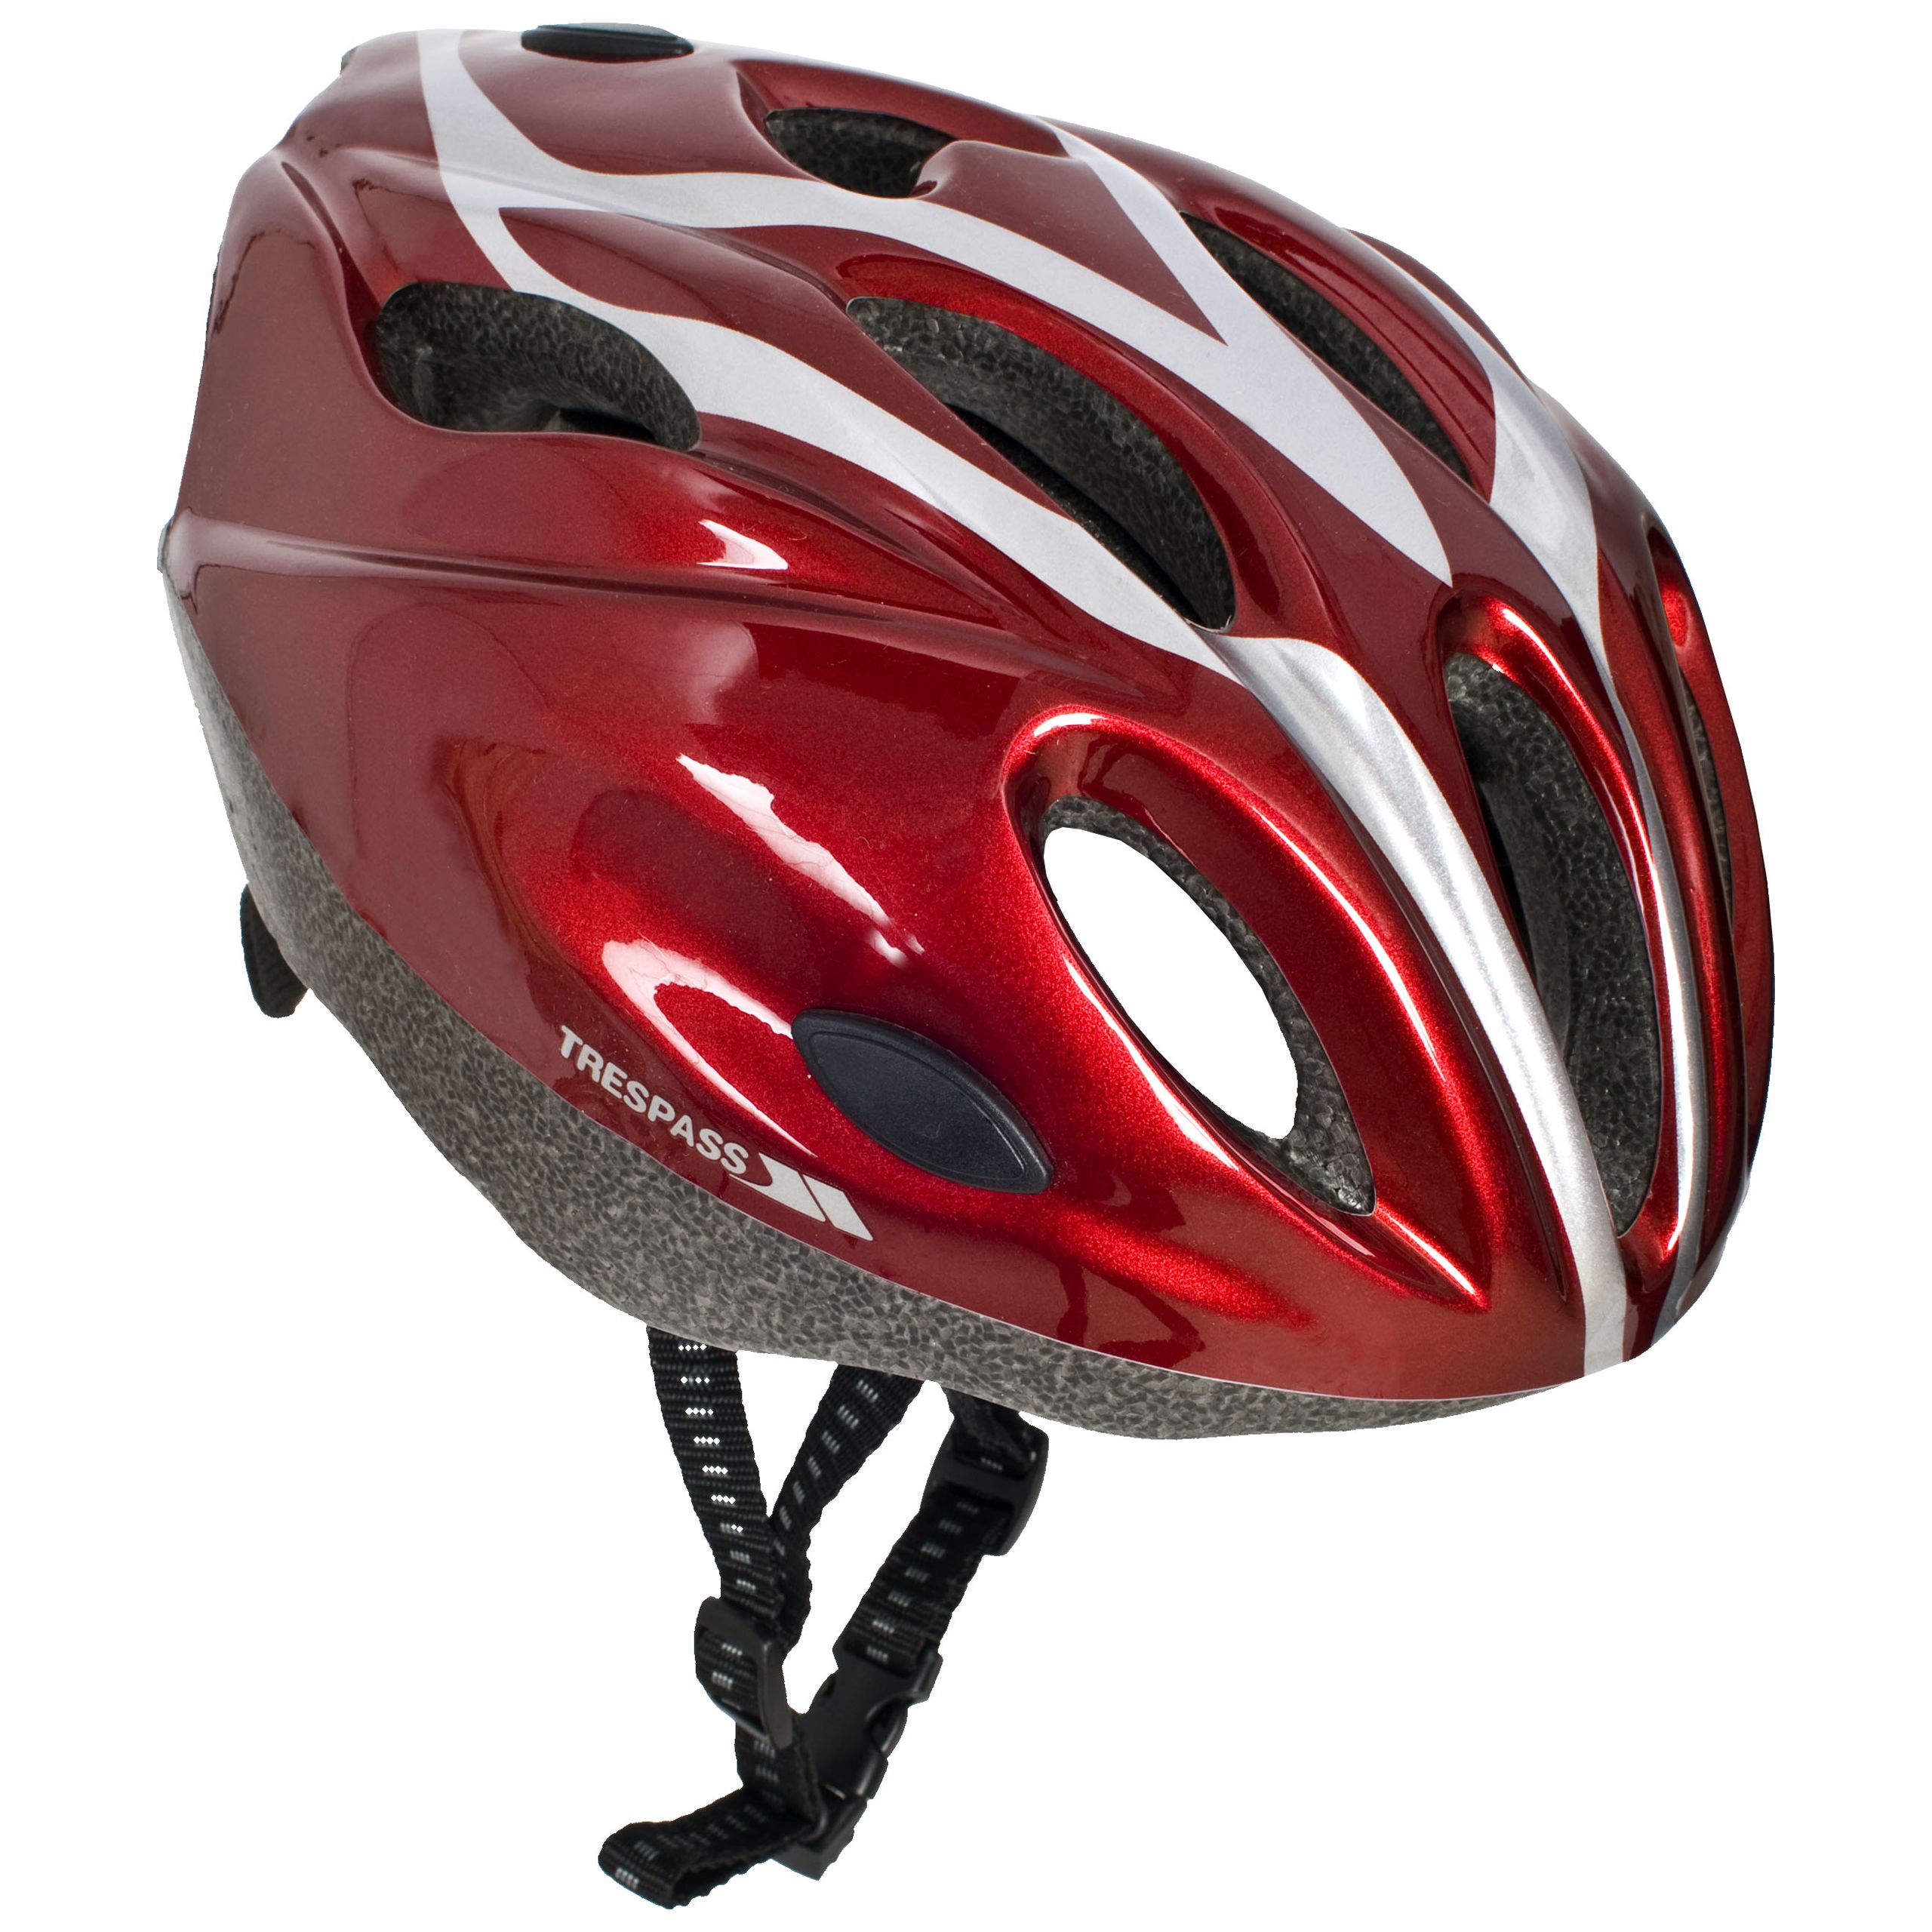 Tanky Red Kids Bike Helmet